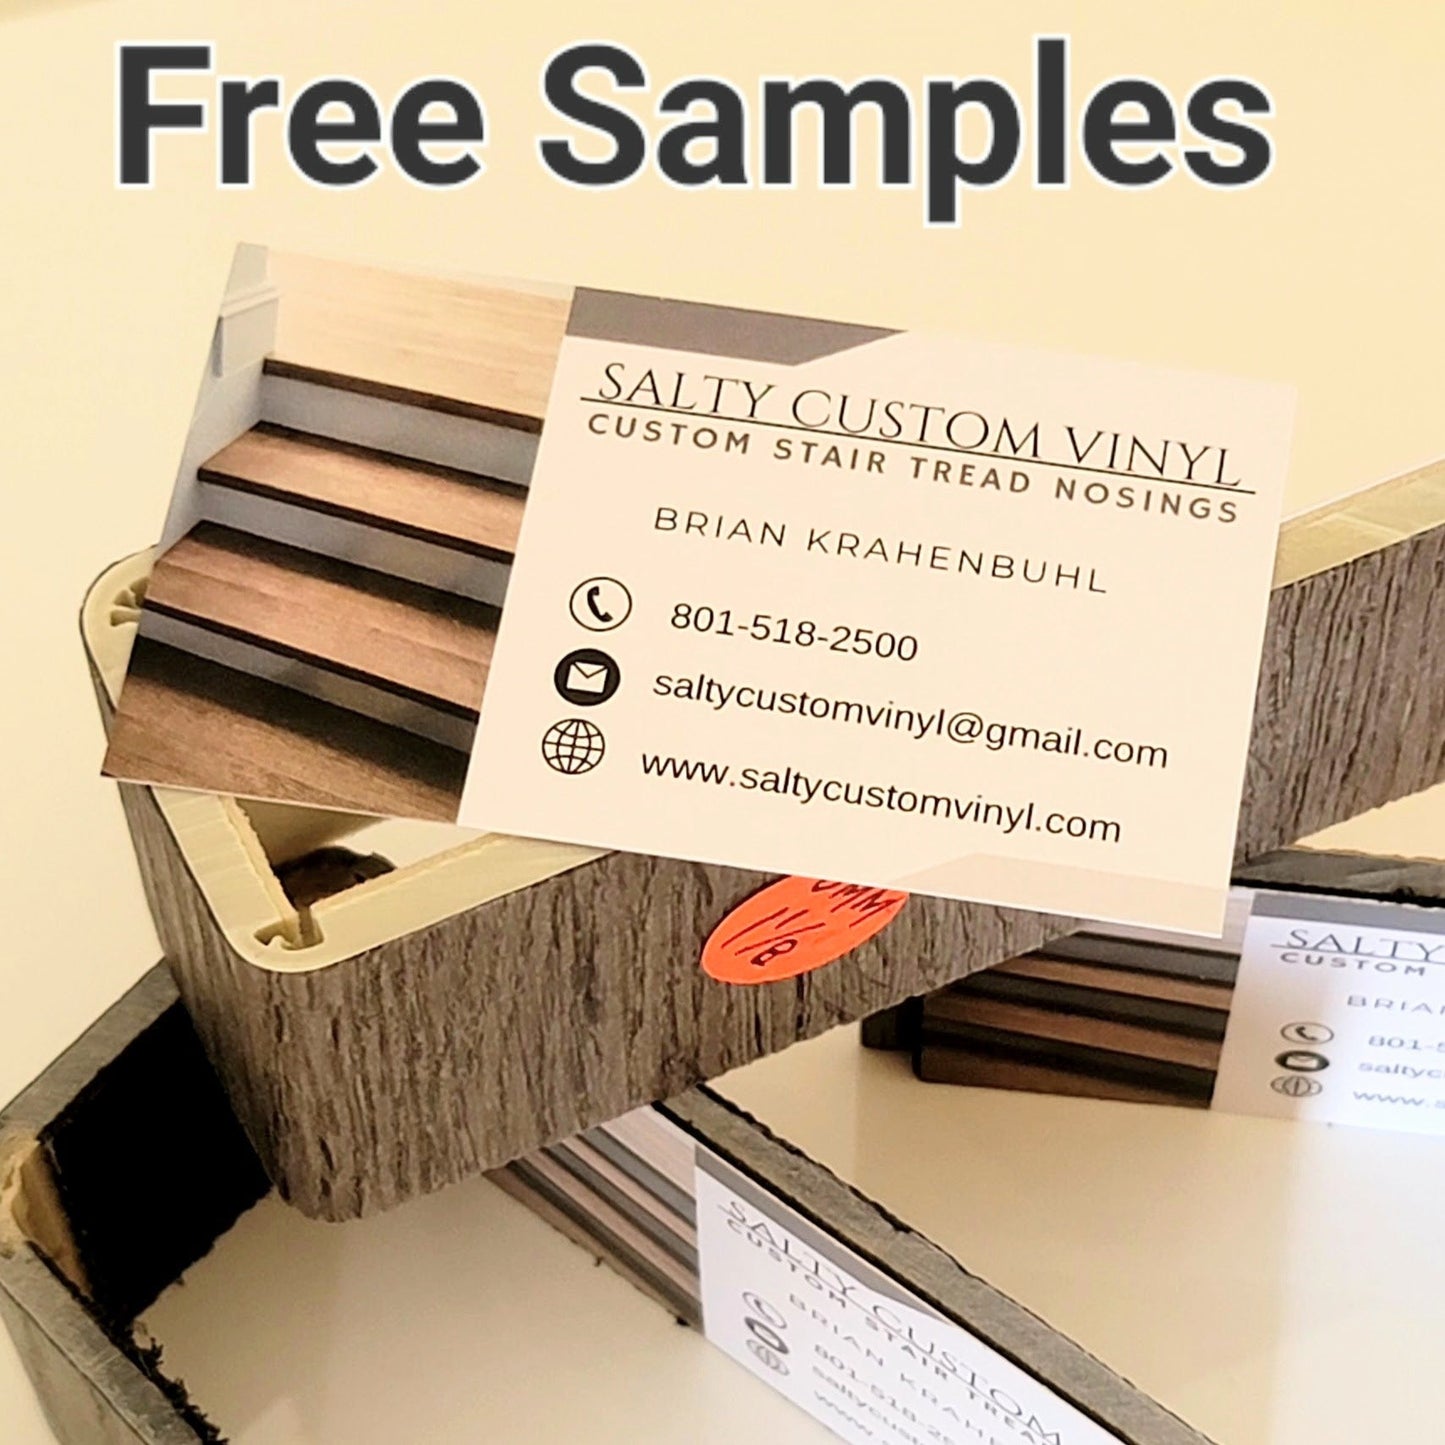 Stair Nosing Free Sample - Contact Info- Salty Custom Vinyl